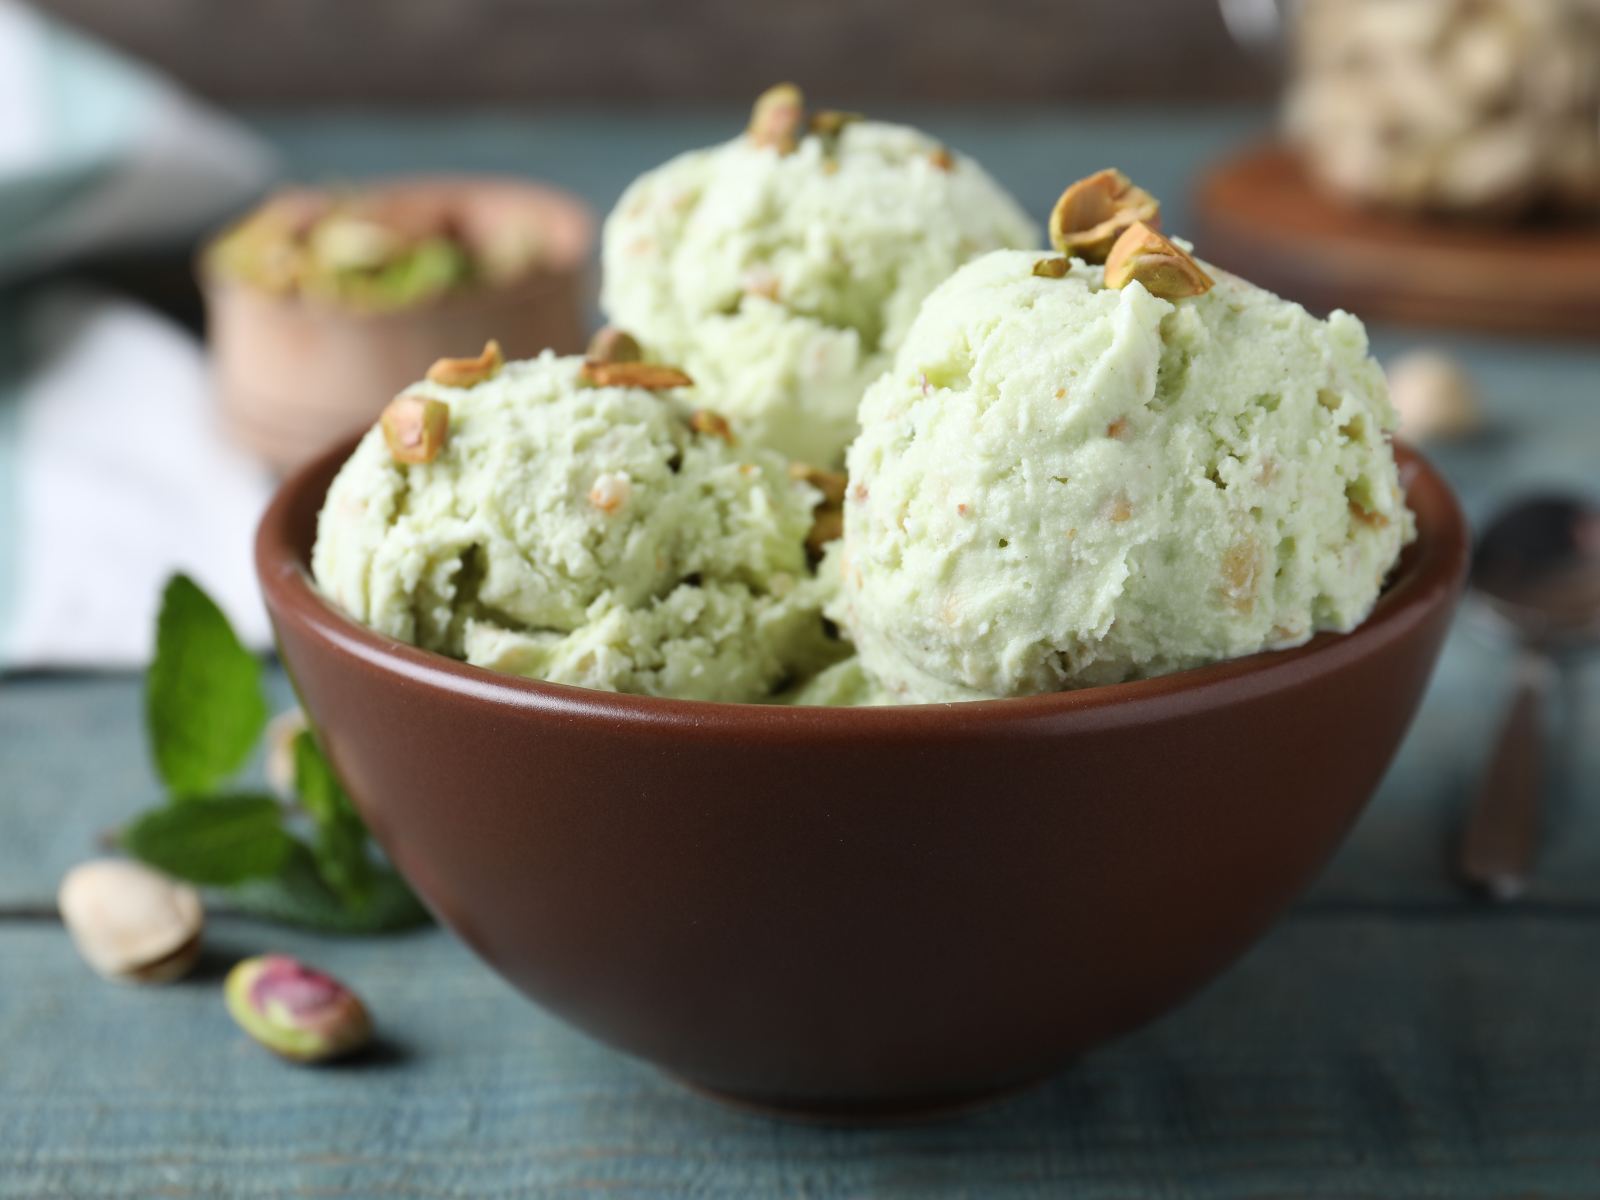 pistachio ice cream topped with pistachios